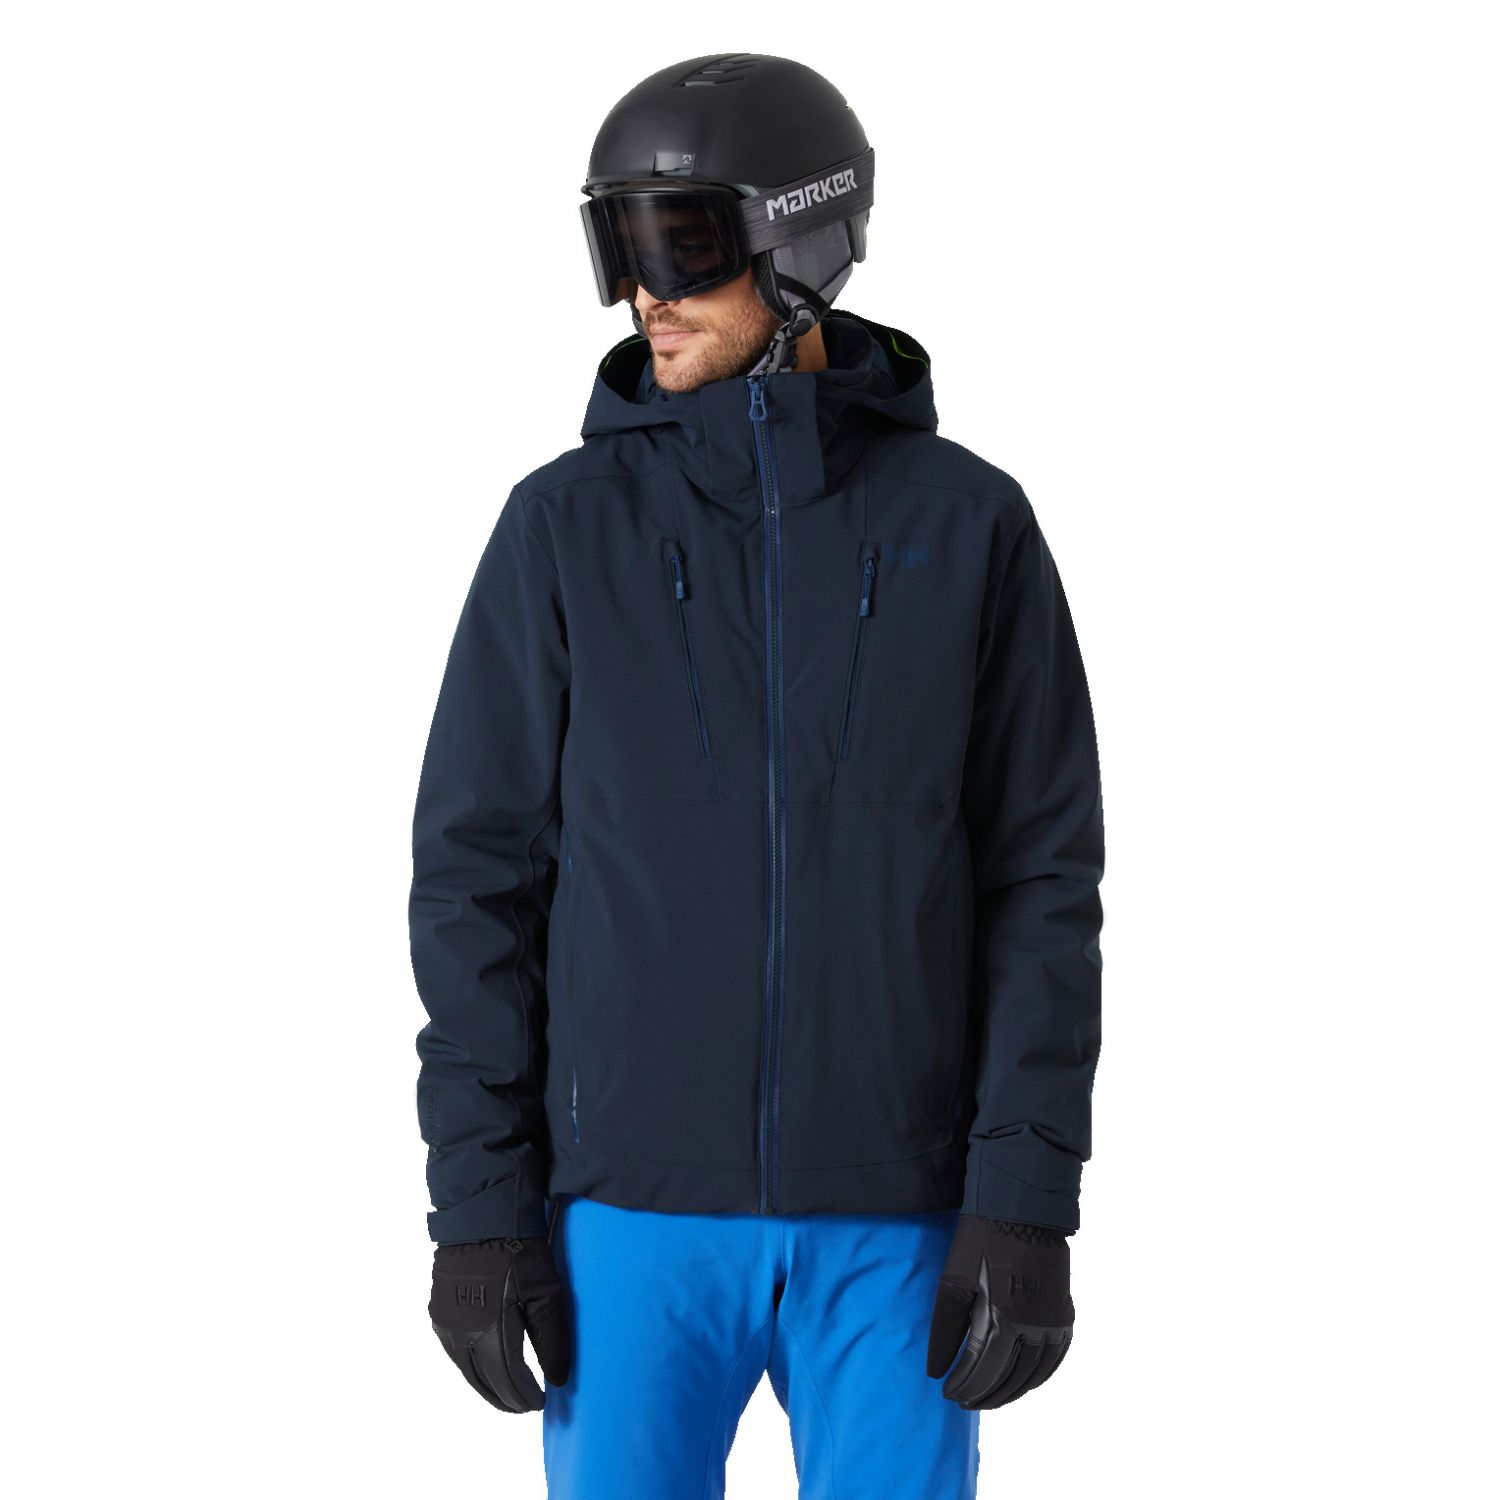 Helly Hansen Garibaldi Infinity, ski jacket, men, darkest spruce